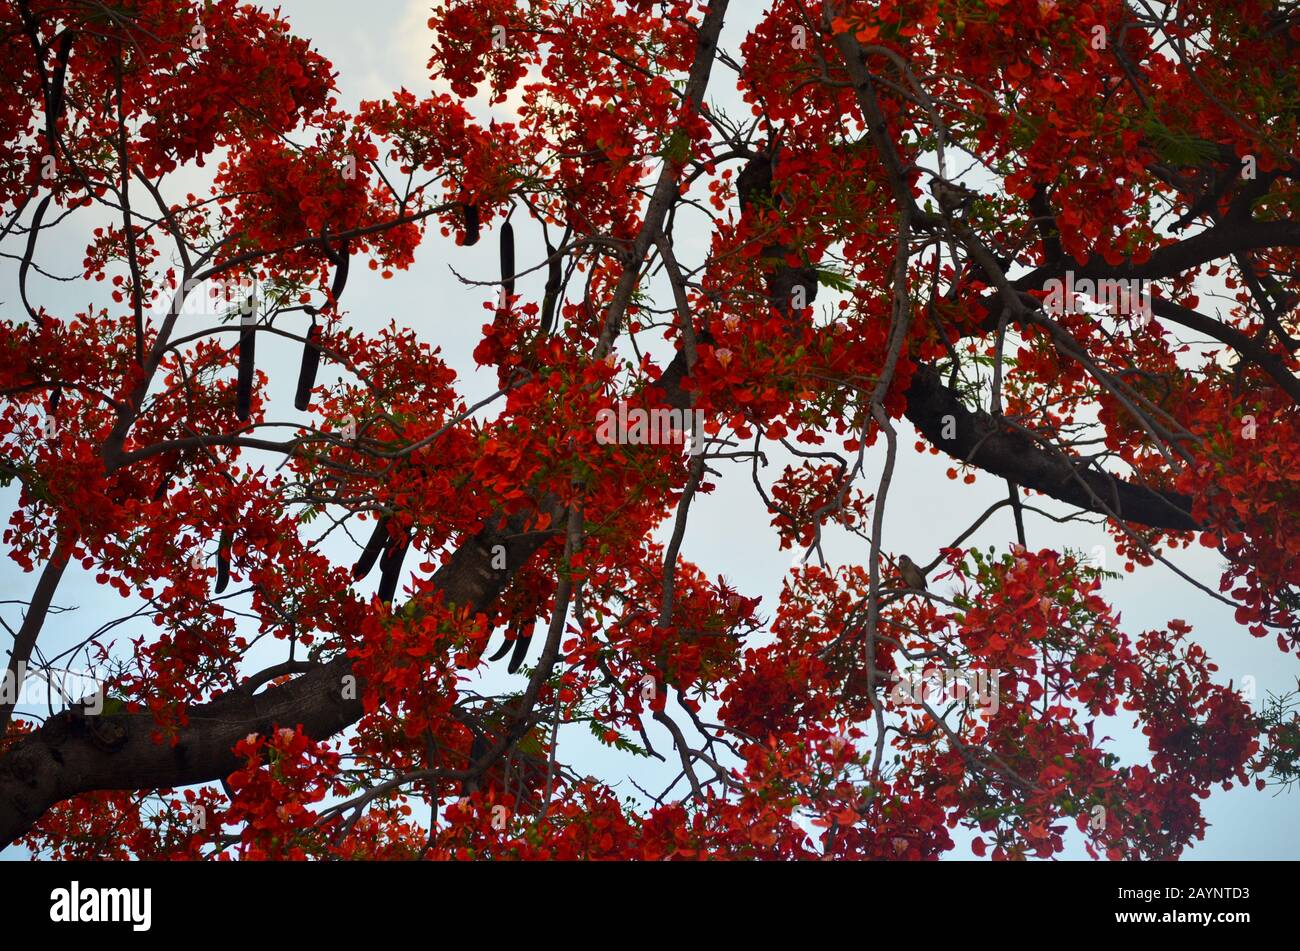 Flame tree or flamboyan (Delonix regia) in Bayamo city, southern Cuba Stock Photo